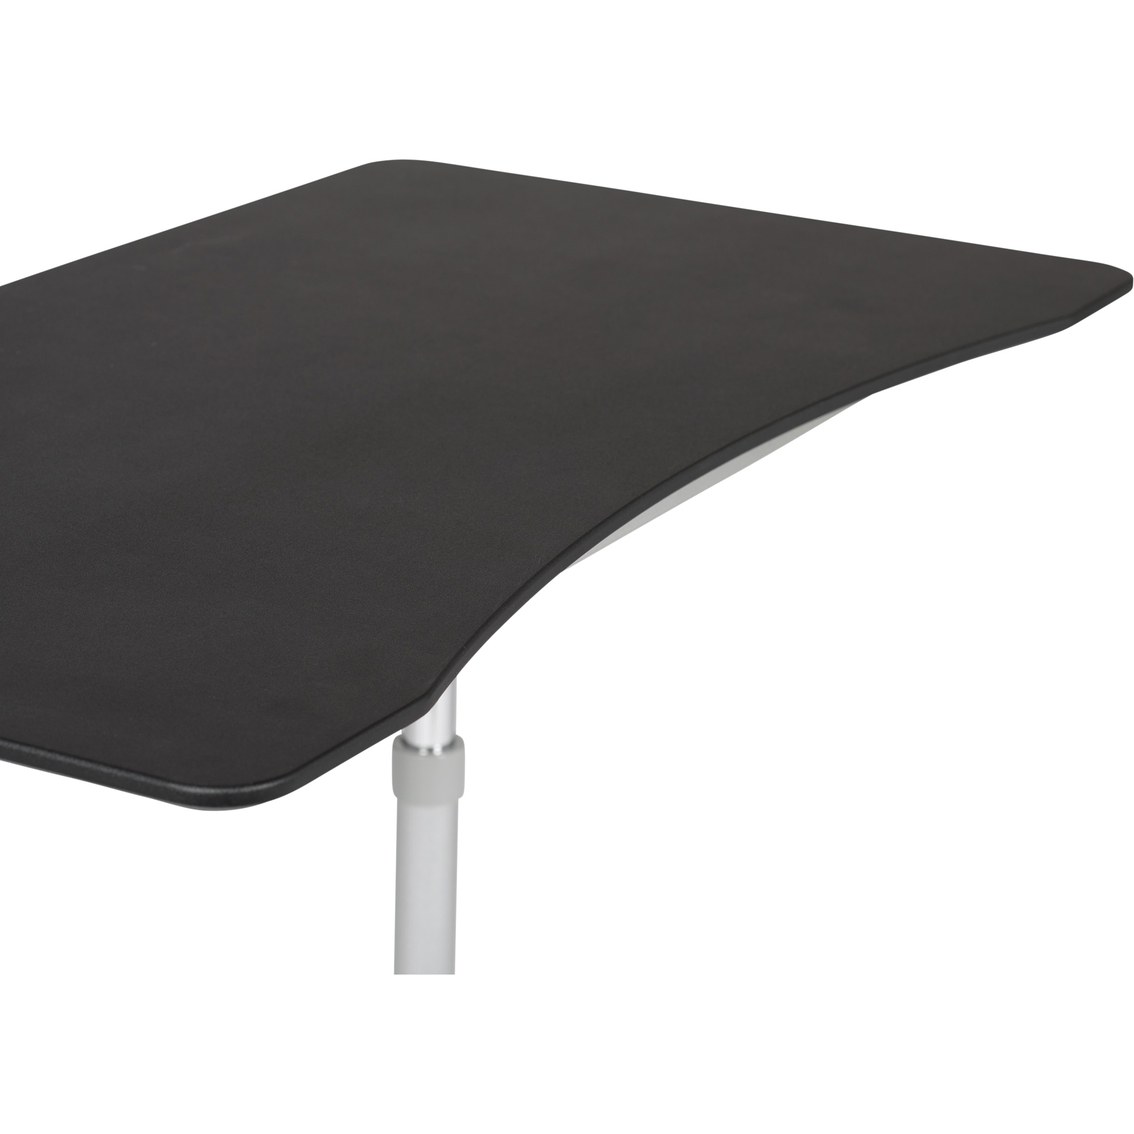 Calico Designs Sierra Adjustable Height Desk - Image 7 of 9